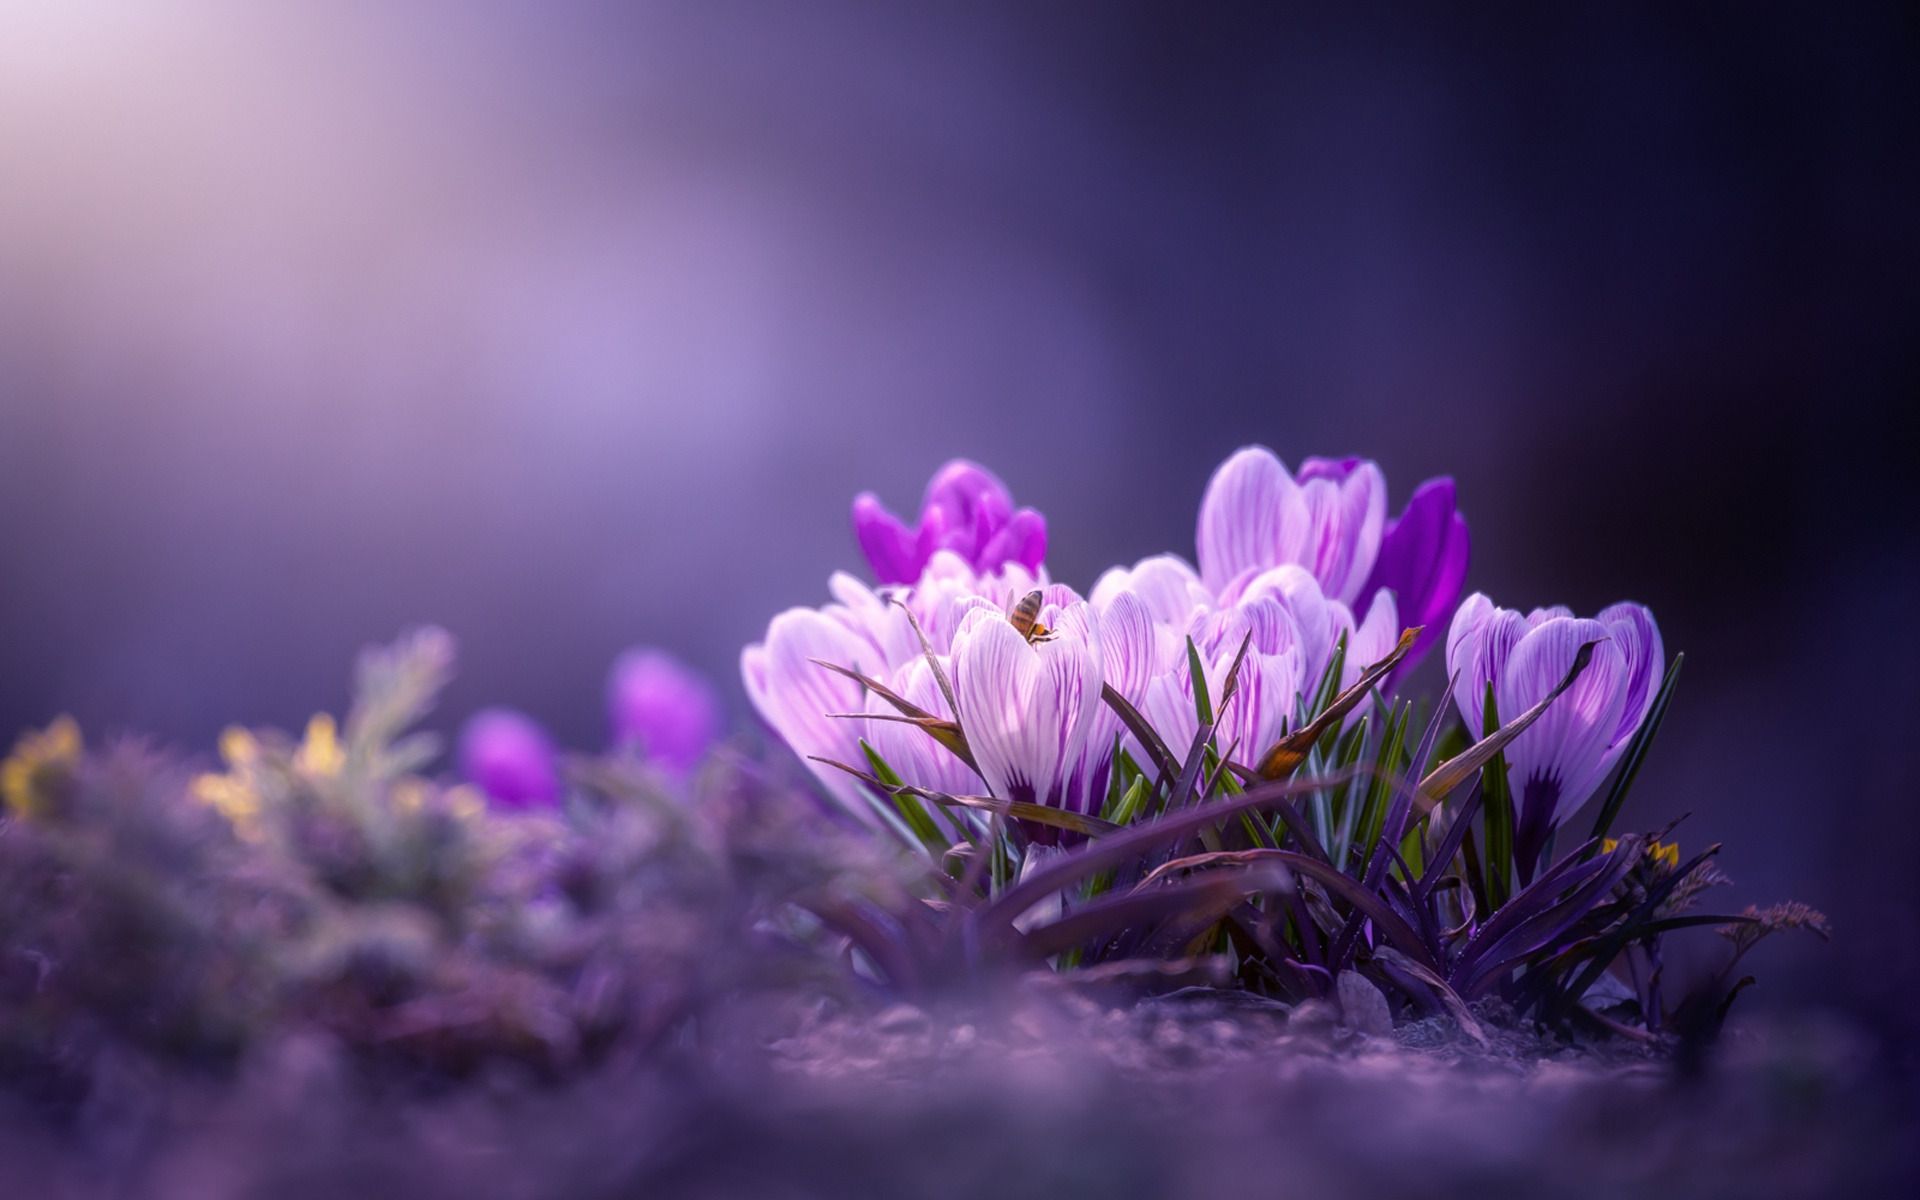 Download wallpaper pink crocuses, spring flowers, purple floral